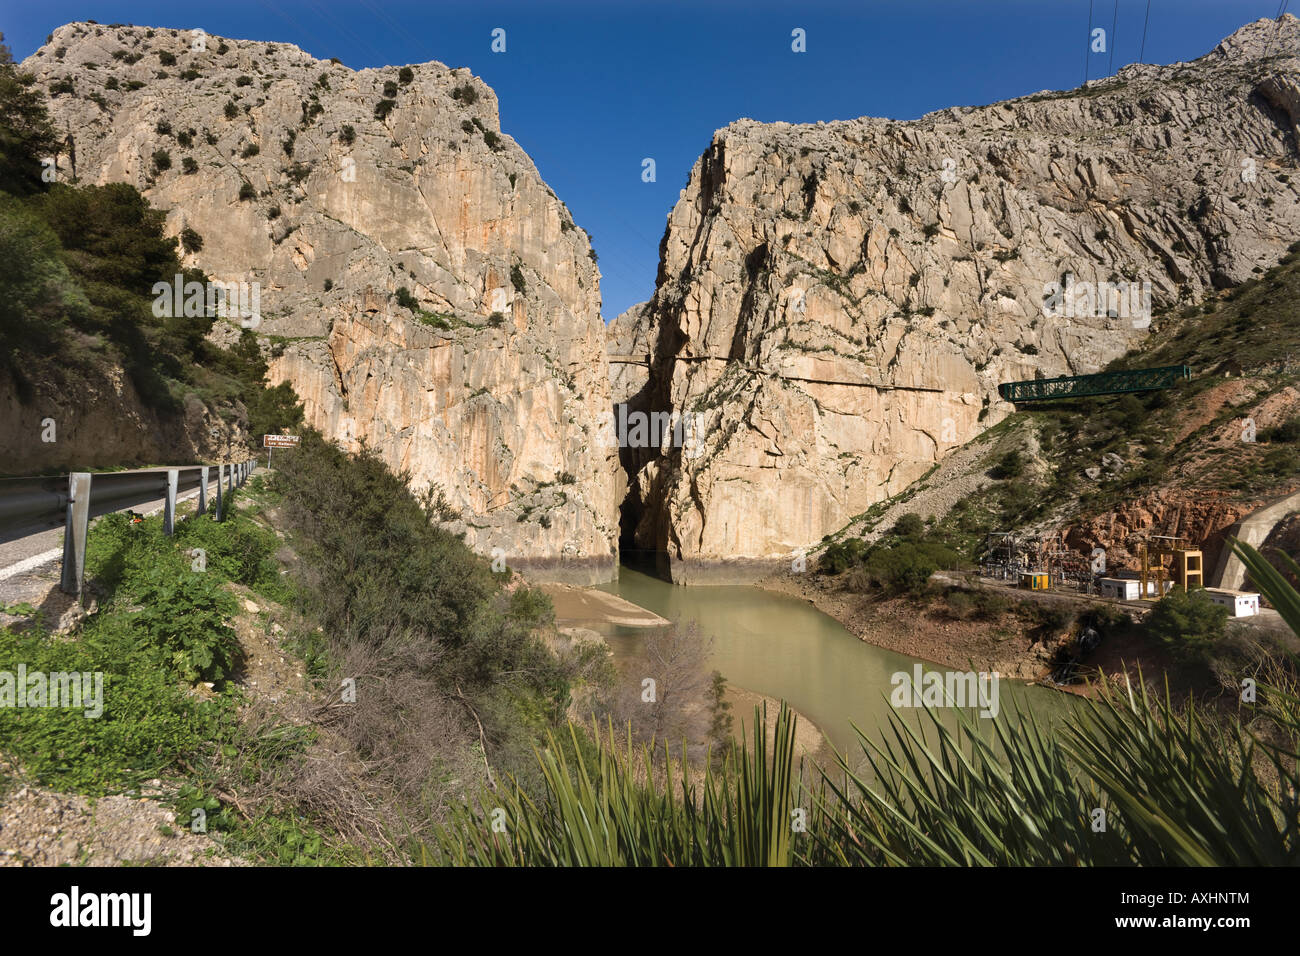 El Chorro Schlucht in der Nähe von Alora, Provinz Malaga, Spanien.  Desfiladero de Los Gaitanes. Stockfoto